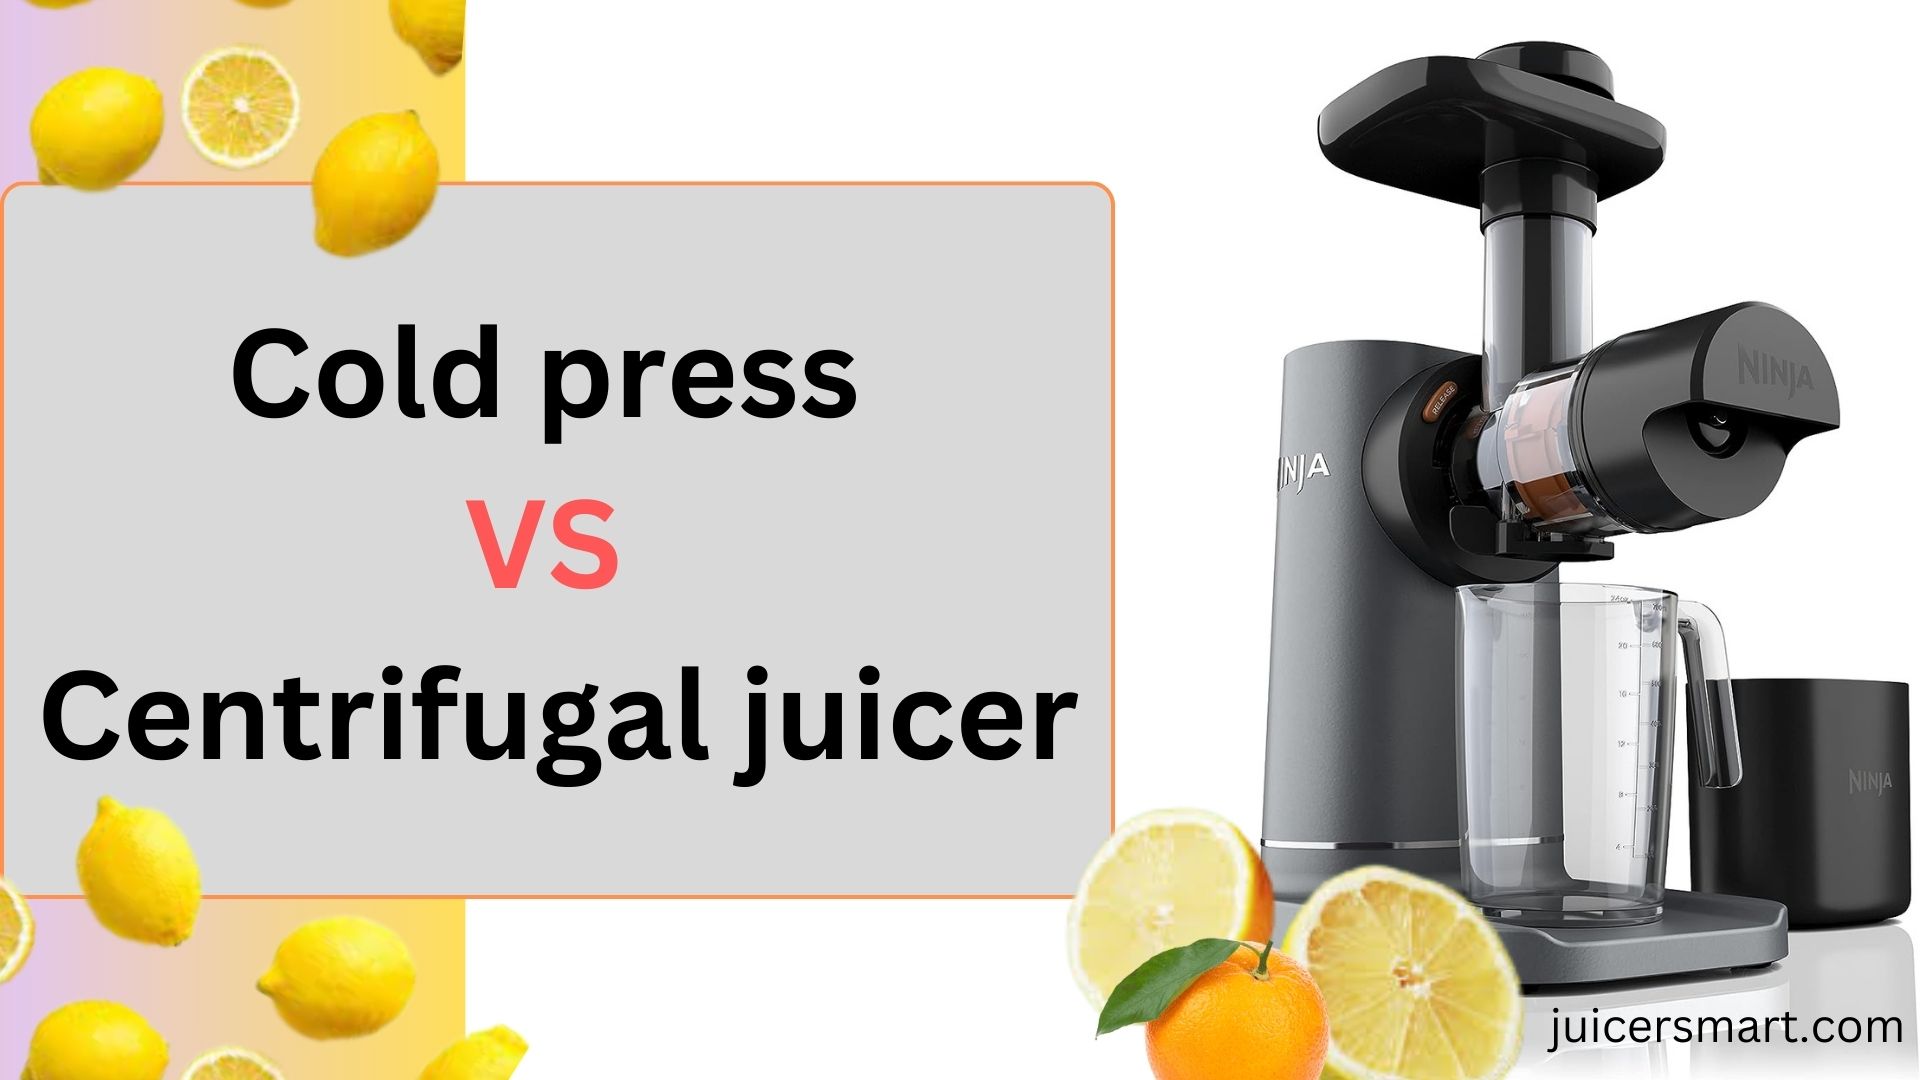 Cold press VS Centrifugal juicer